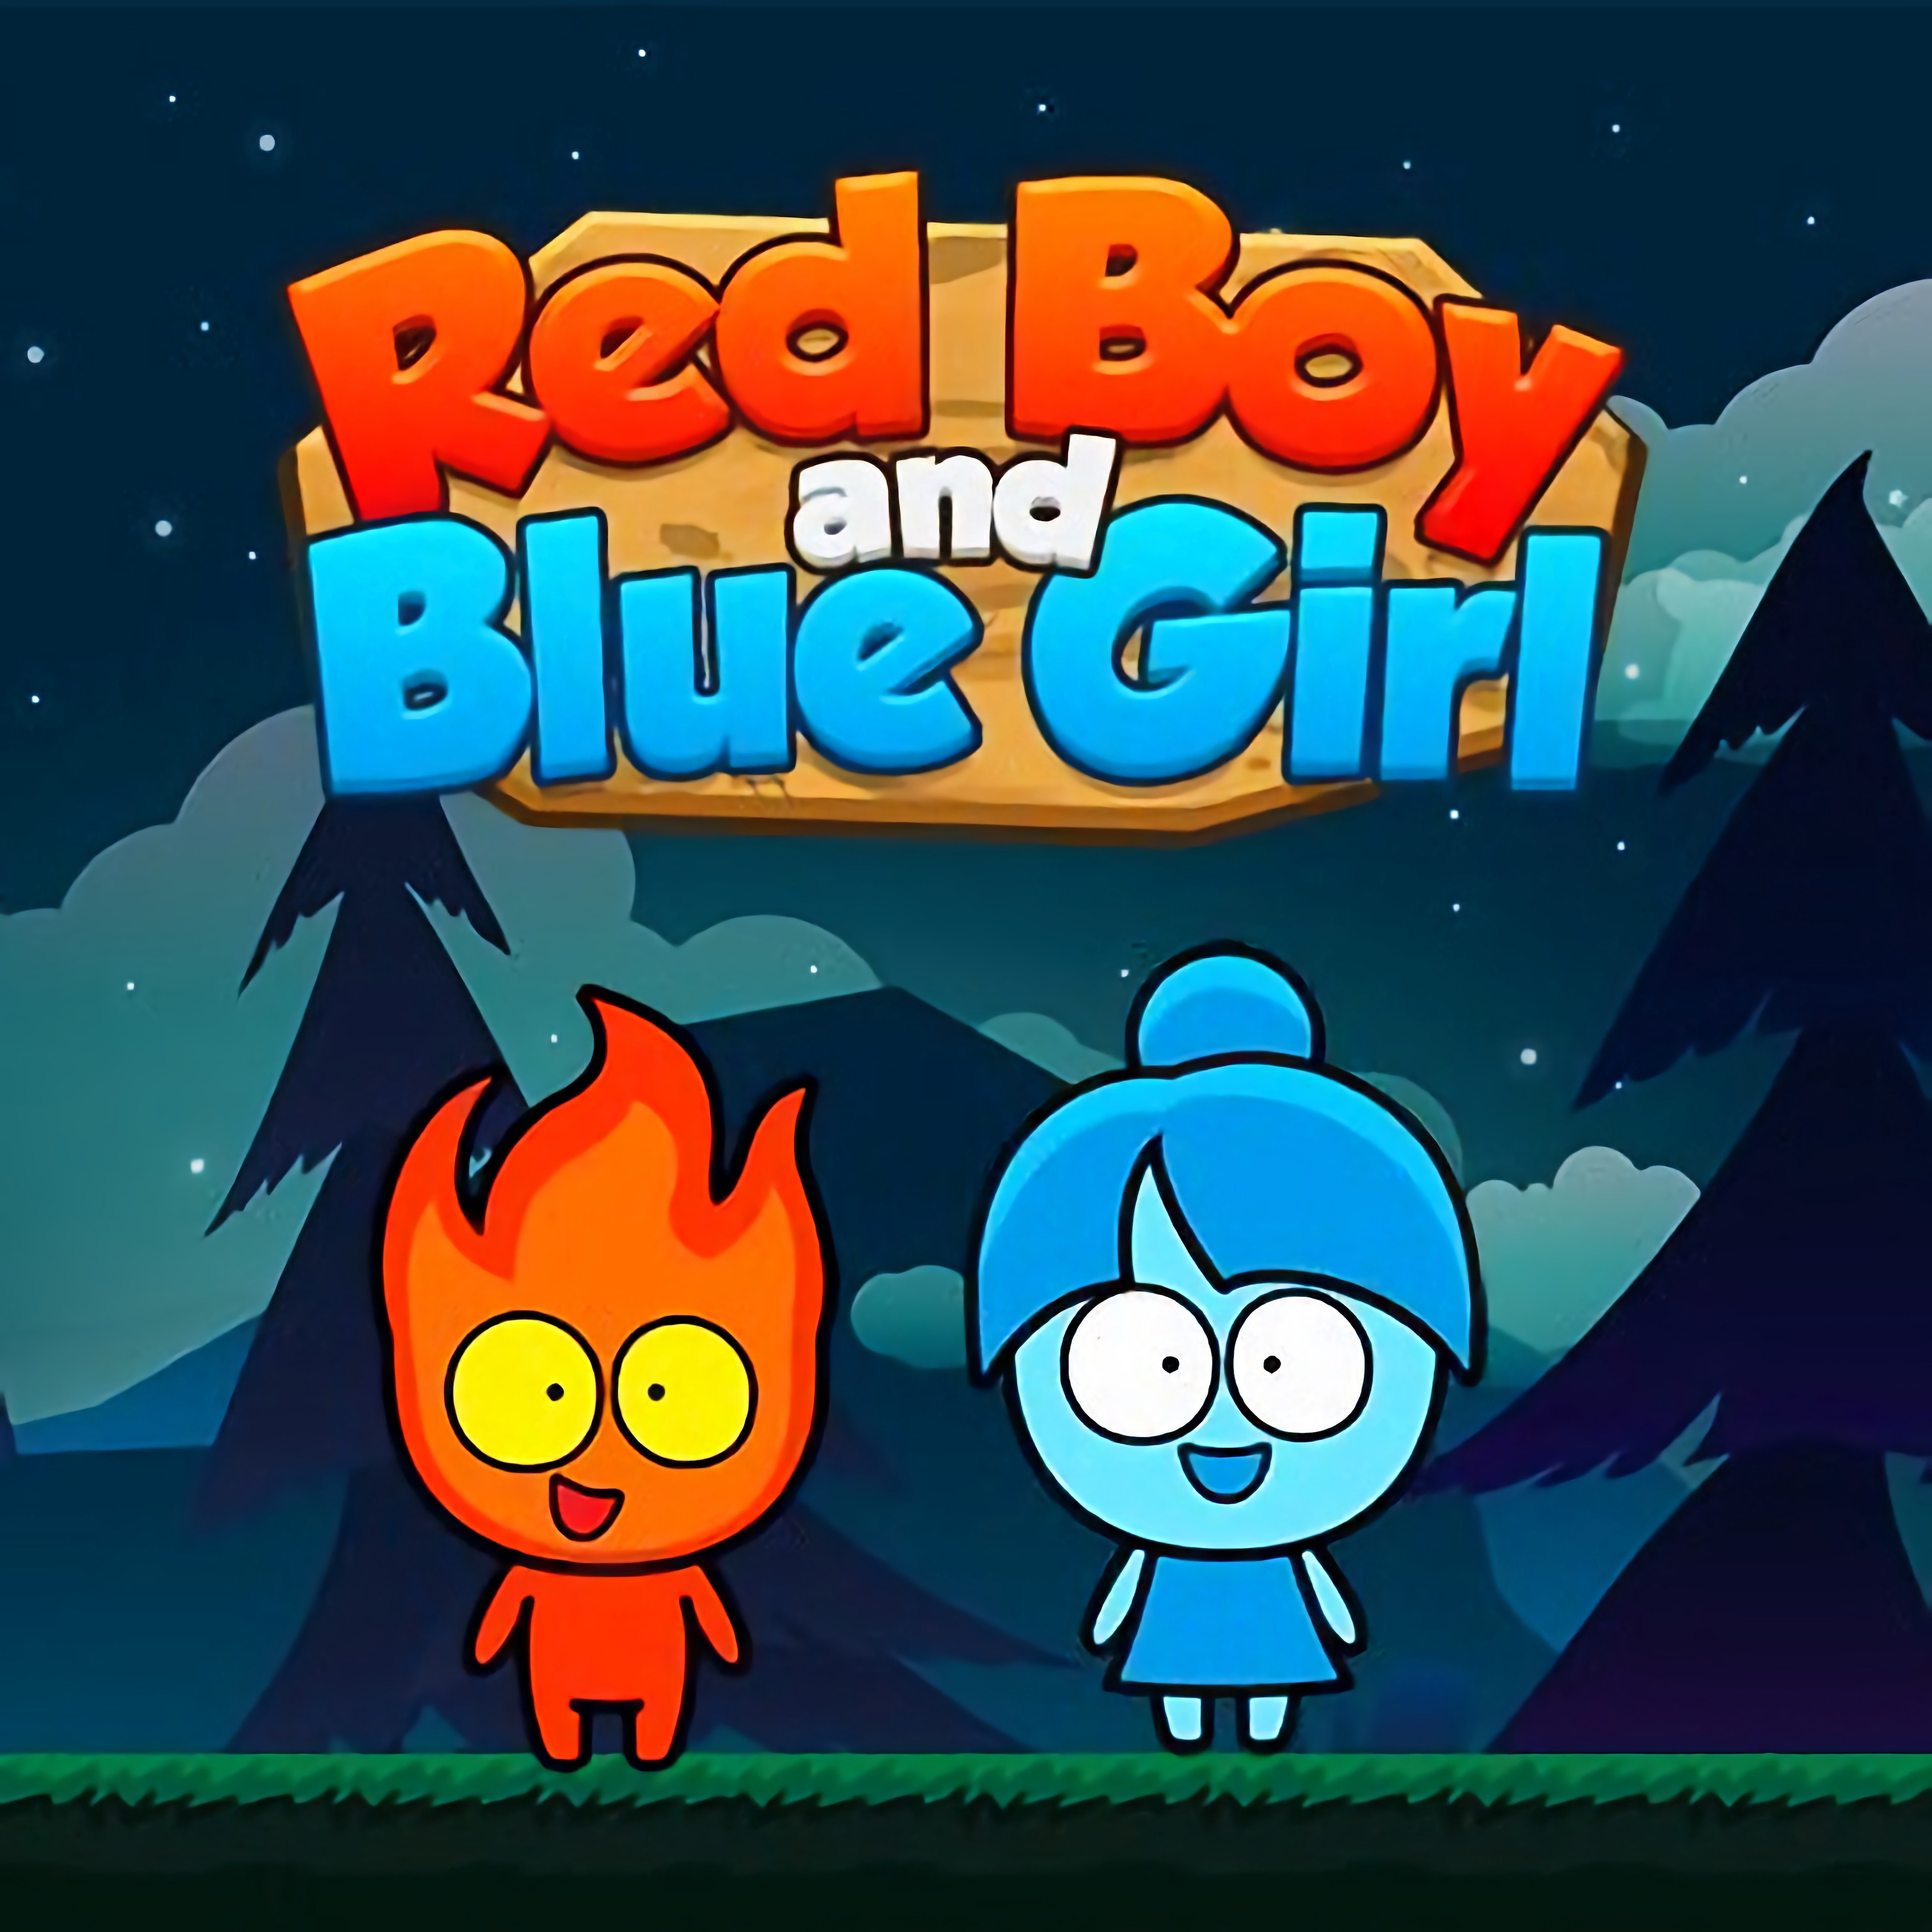 RedBoy and BlueGirl